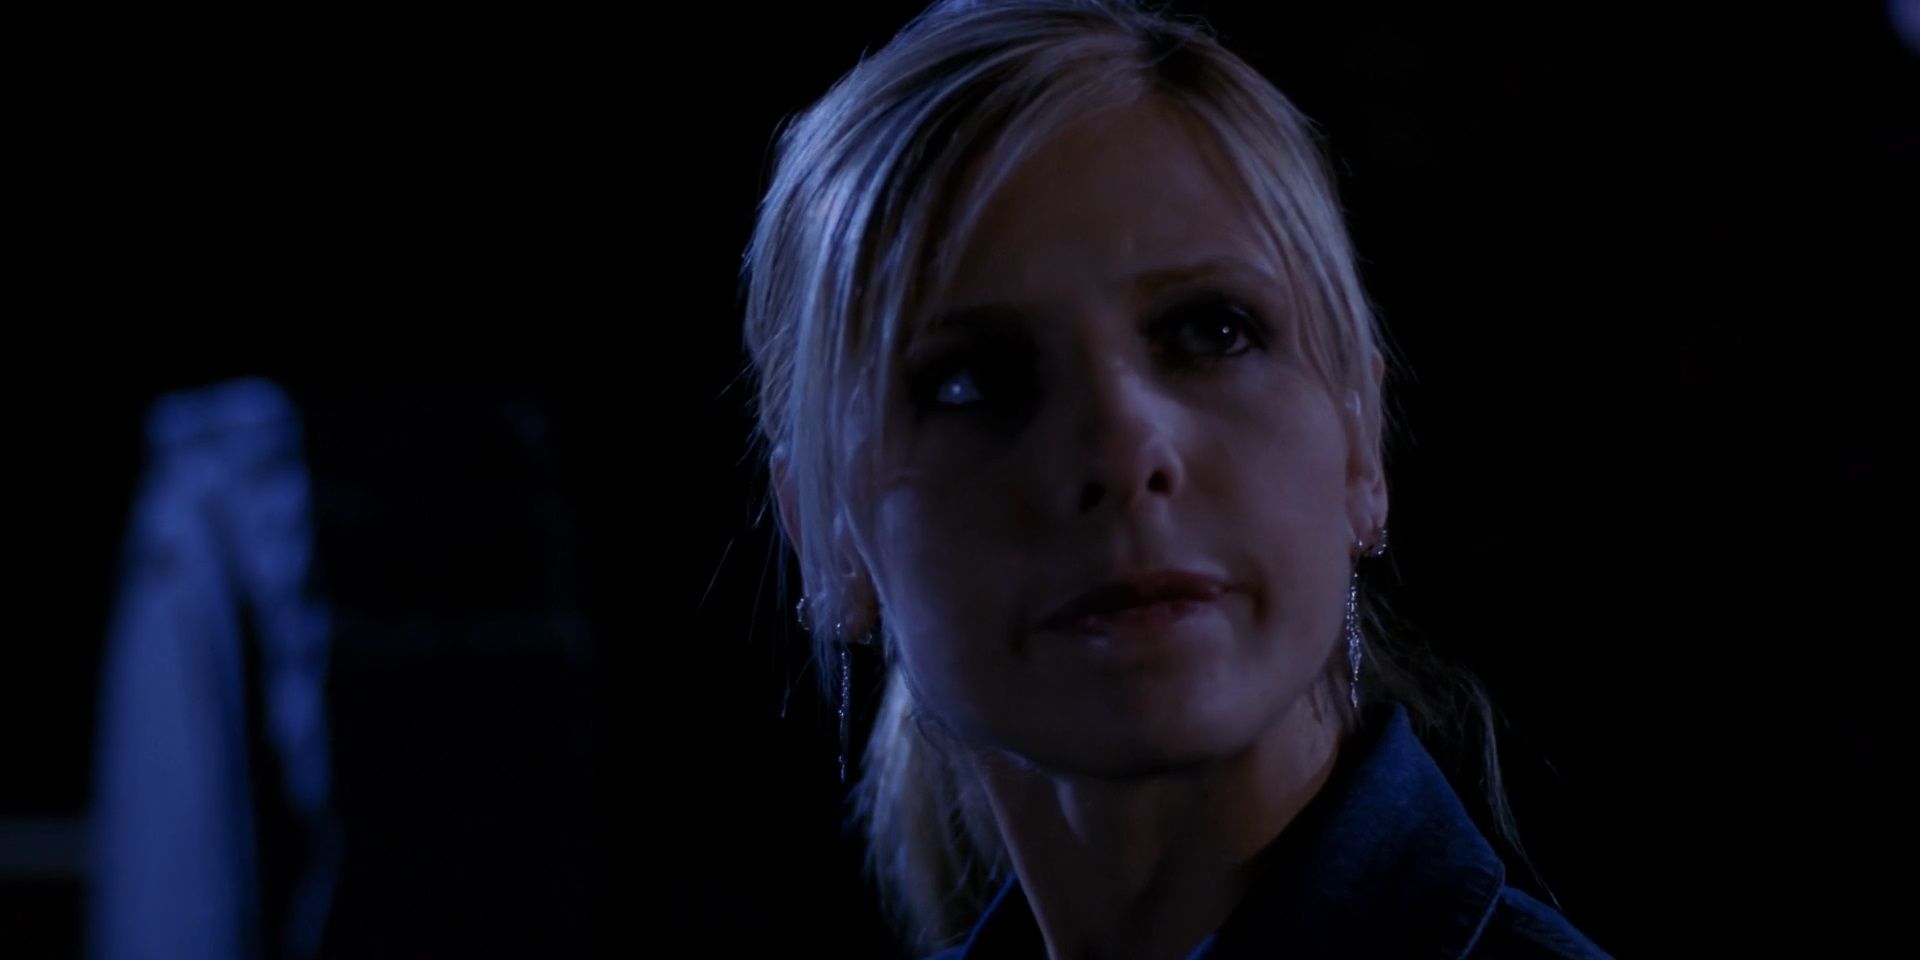 Buffy in the episode "Chosen".